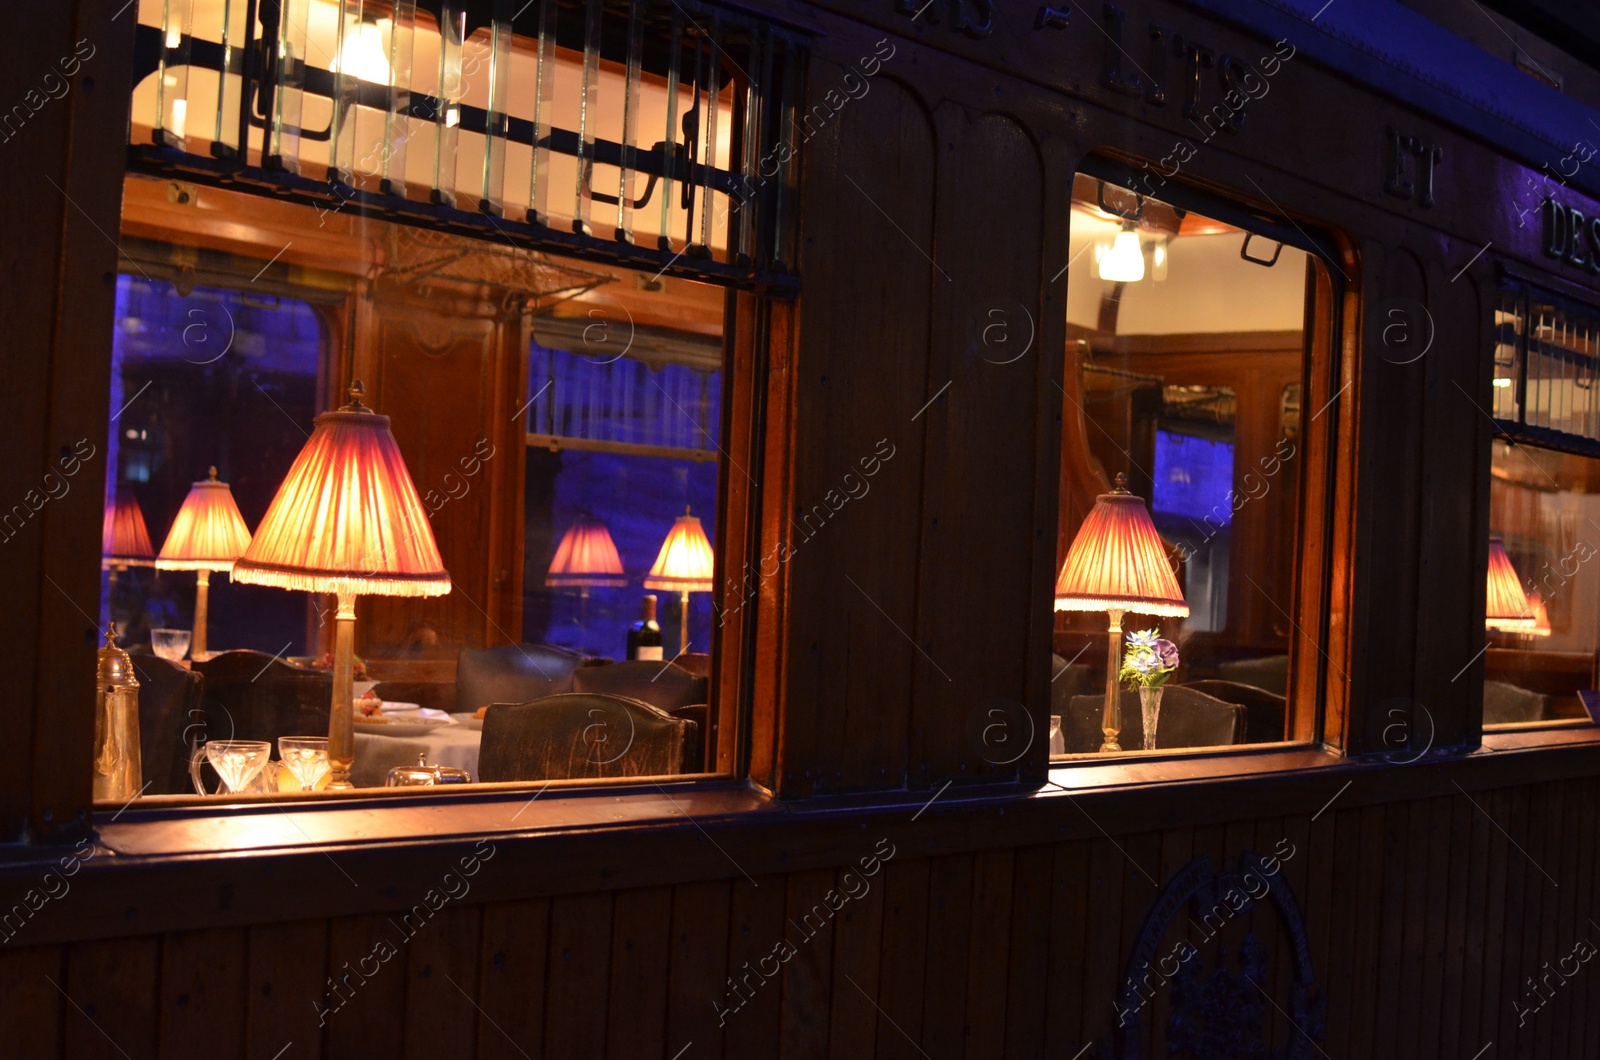 Photo of Utrecht, Netherlands - July 23, 2022: Railway restaurant car at Spoorwegmuseum, view through window